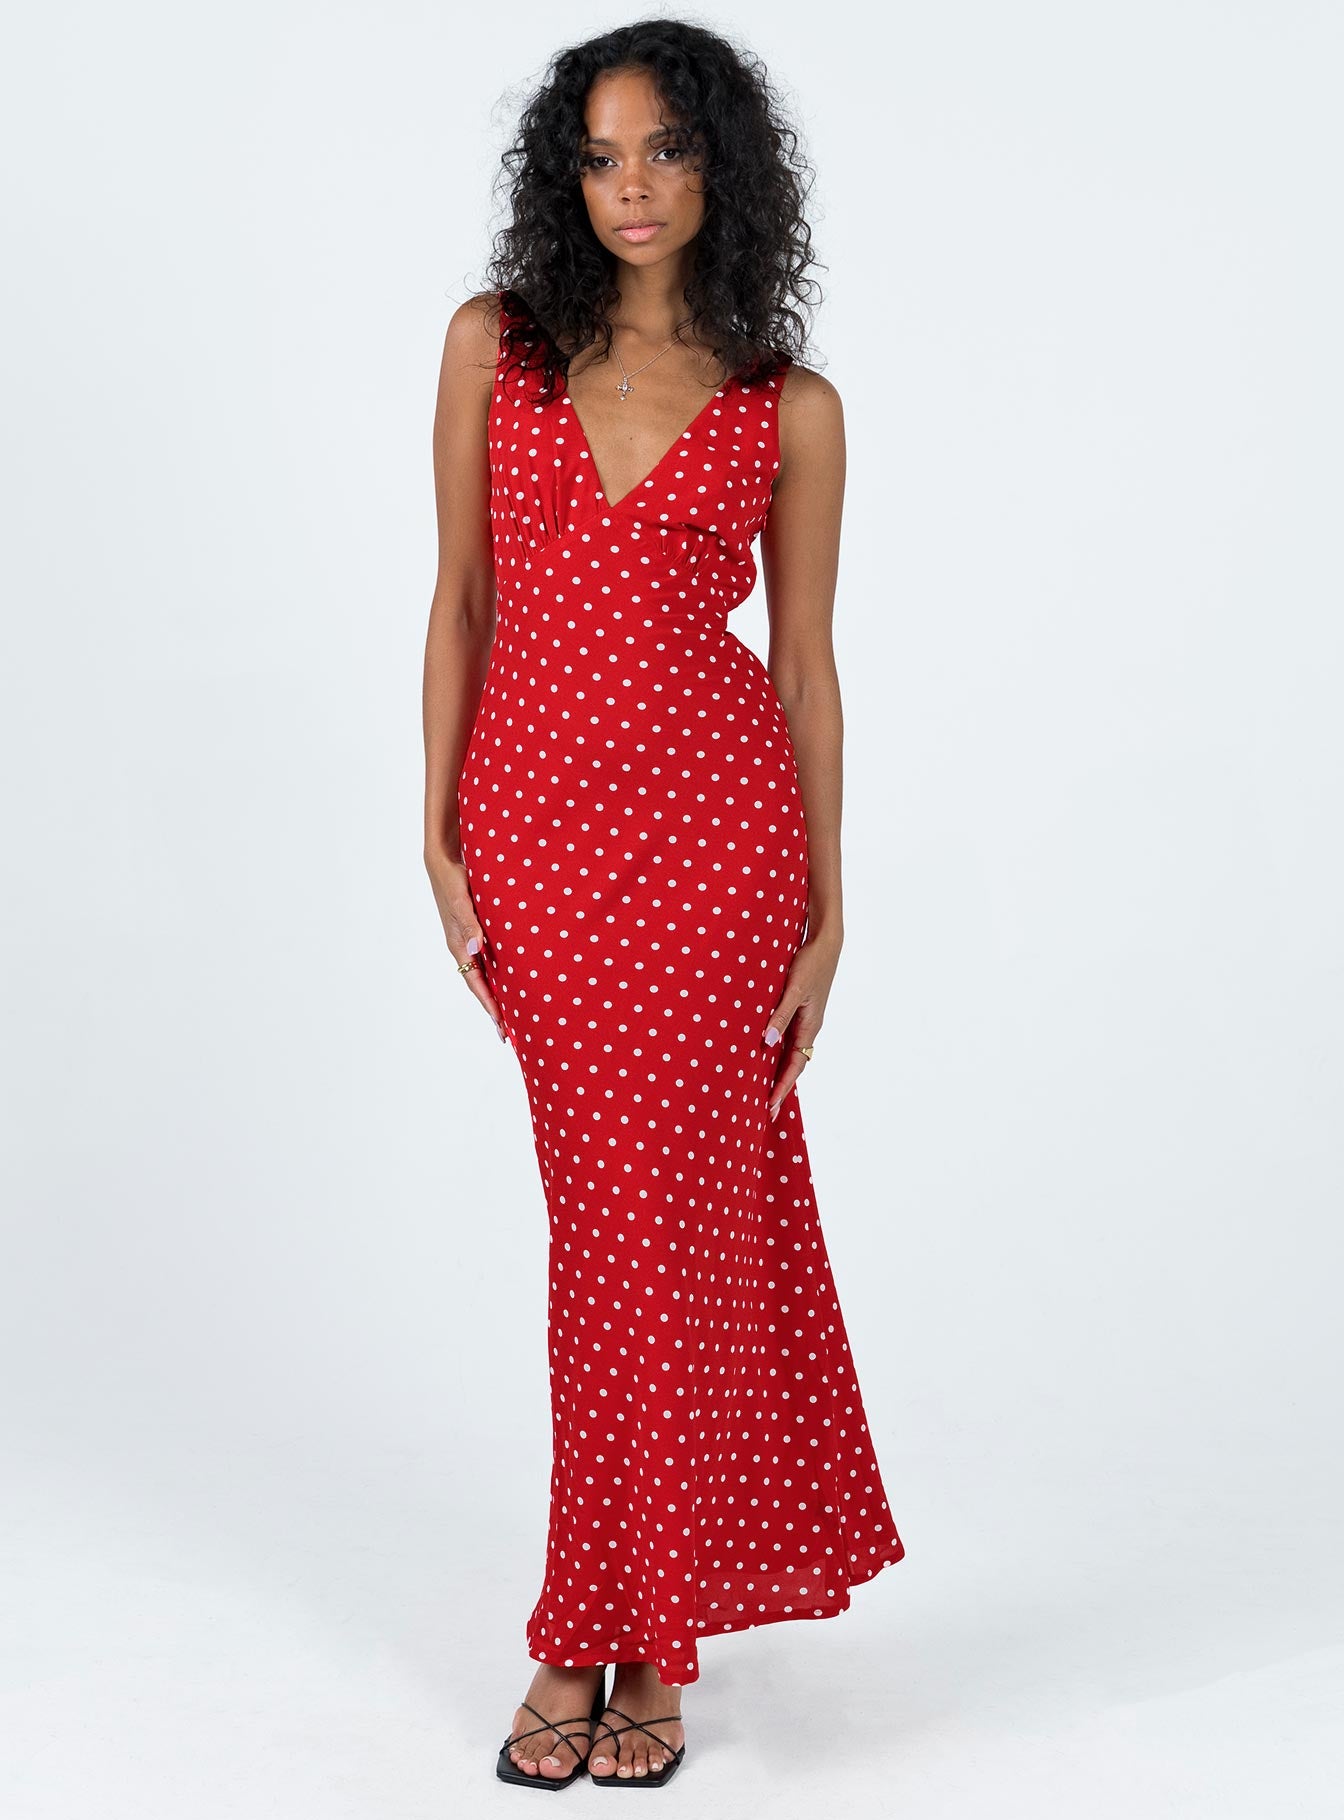 Red Polka Dot Dress | Shopee Philippines